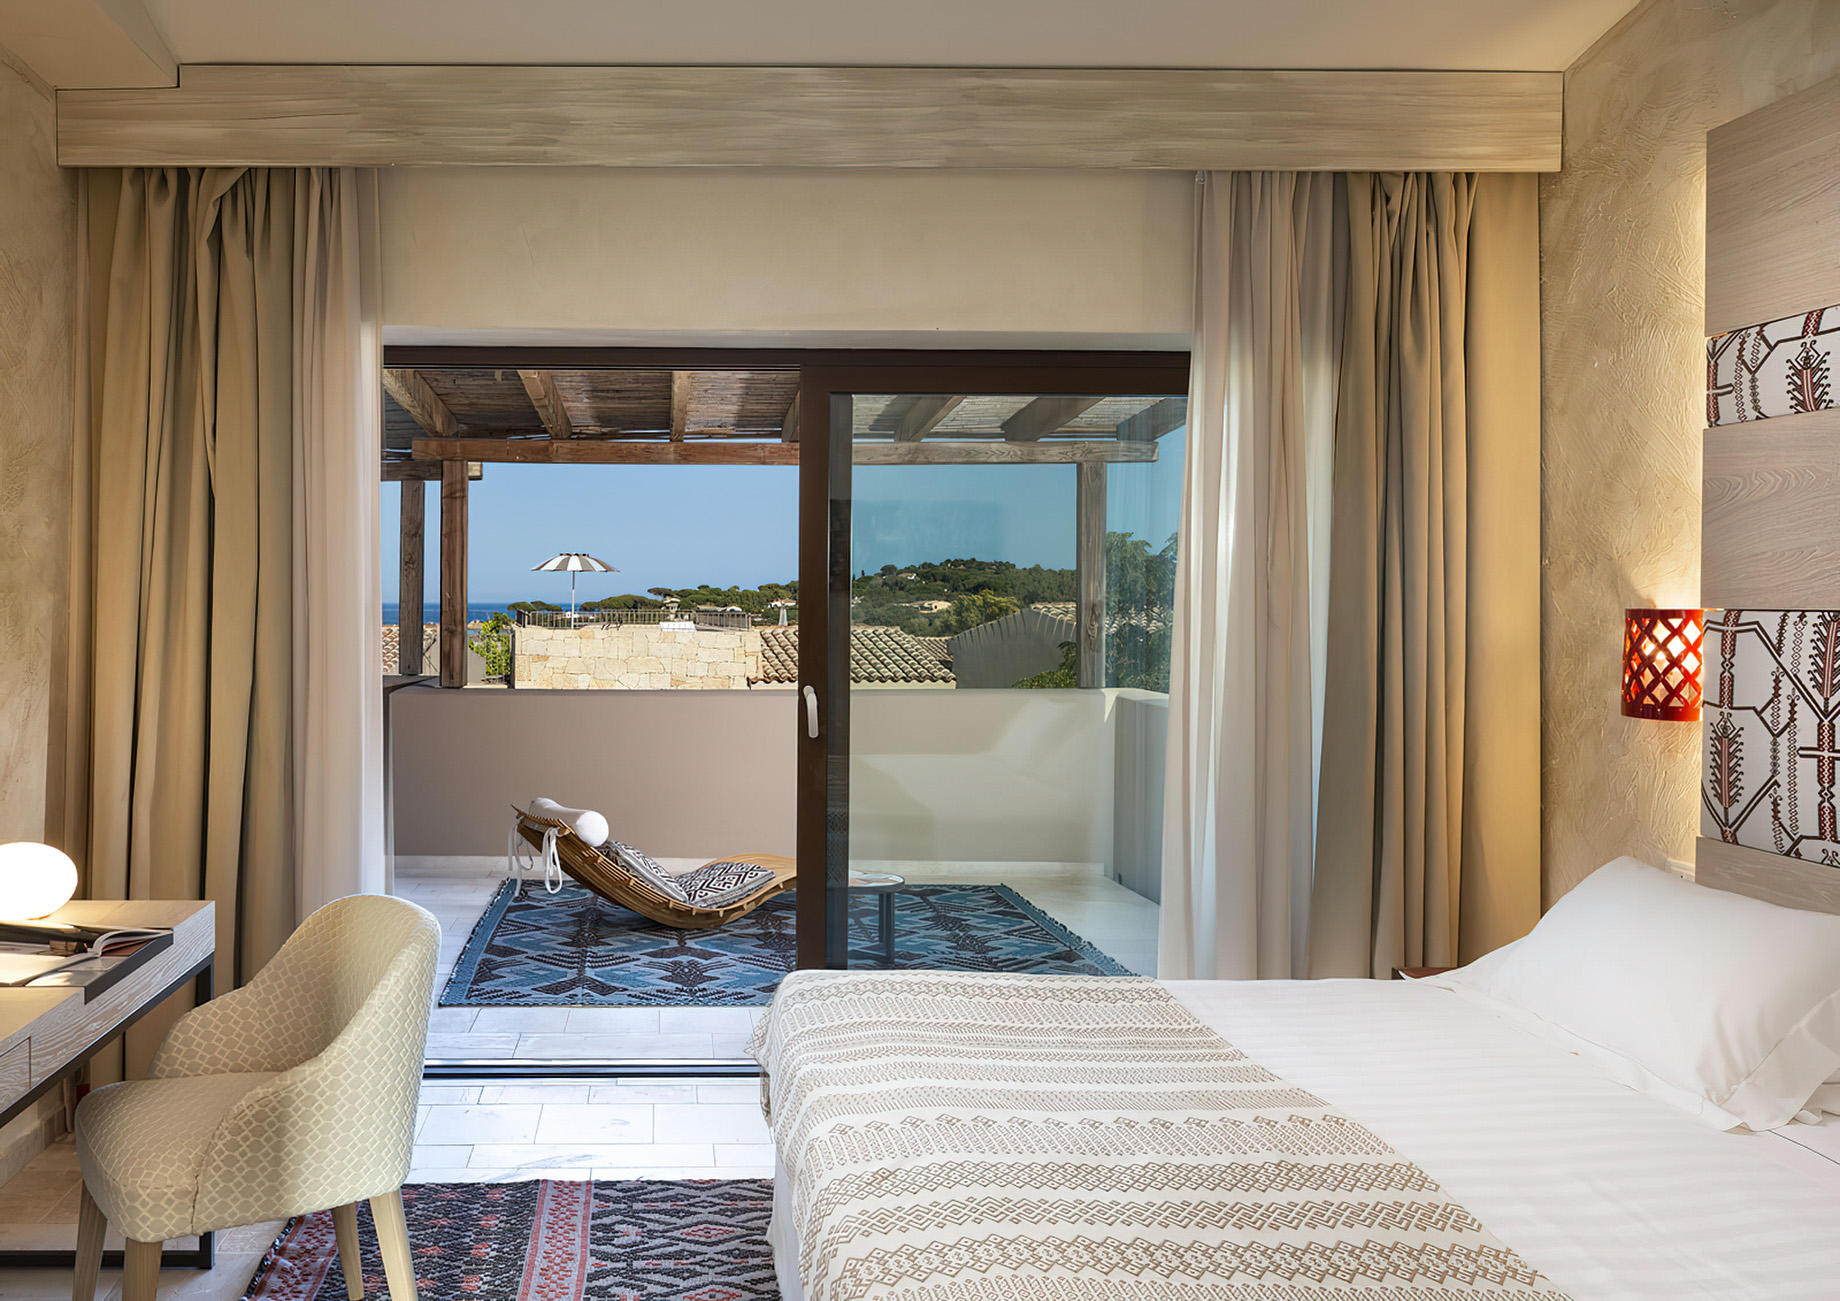 Baglioni Resort Sardinia – San Teodoro, Sardegna, Italy – Tavolara Suite Bedroom